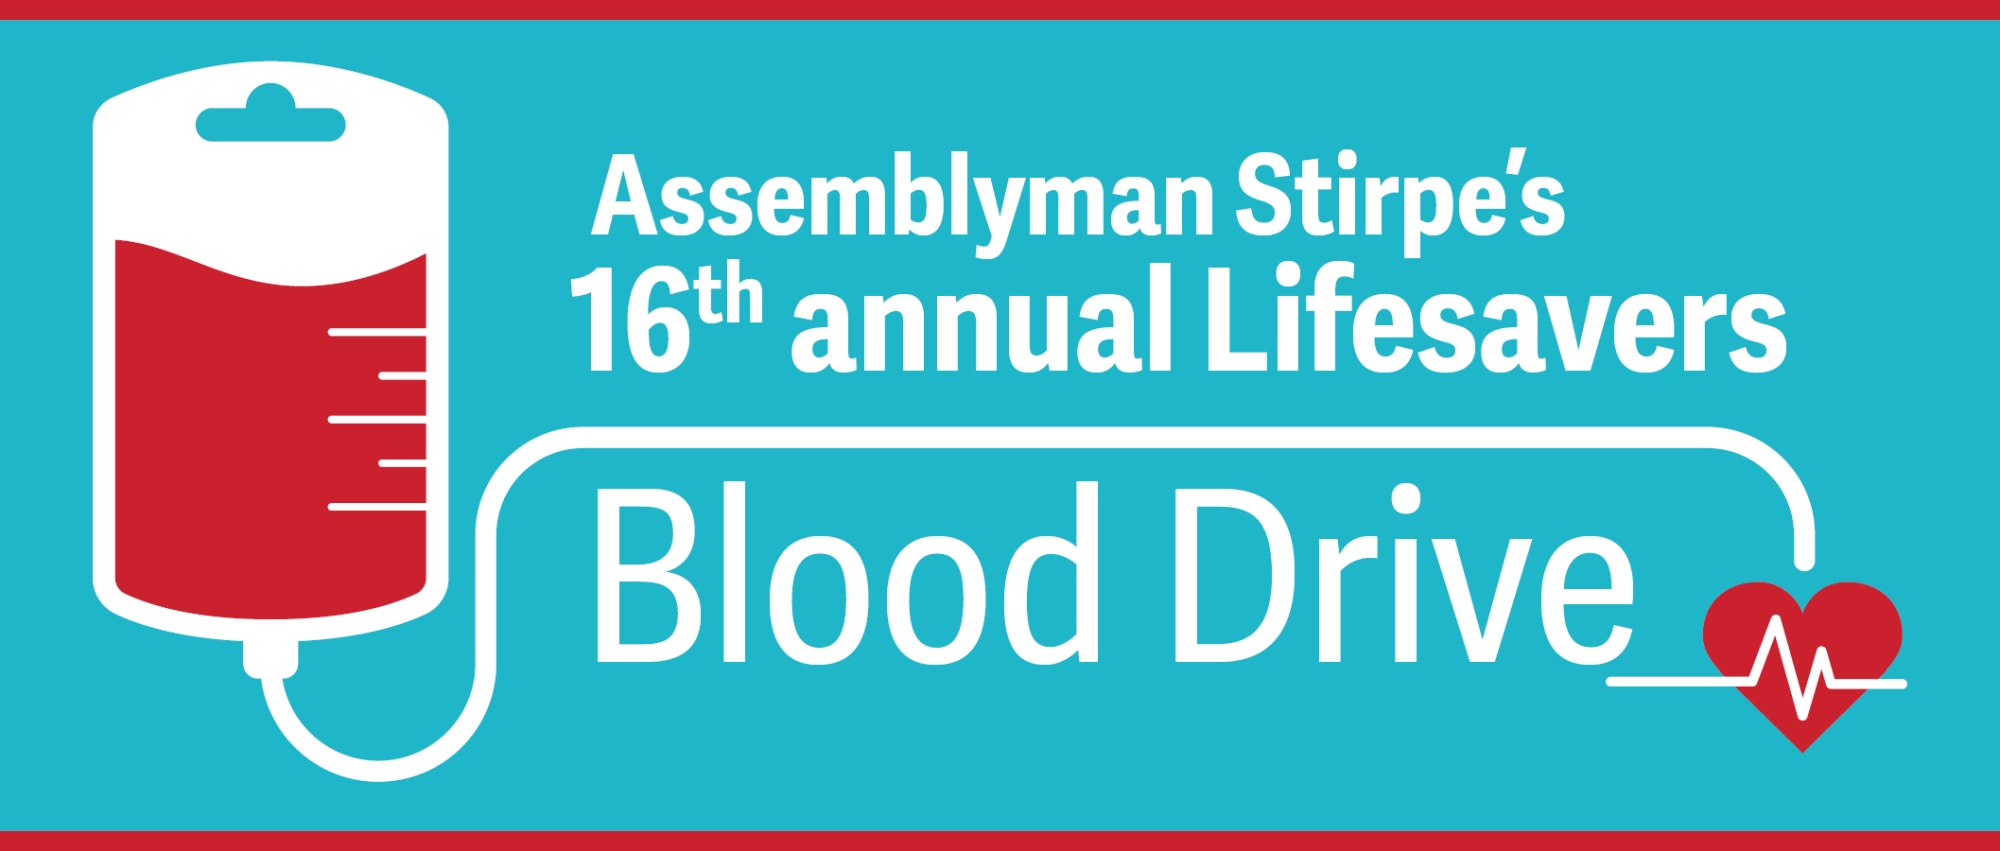 16th Annual Lifesavers Blood Drive